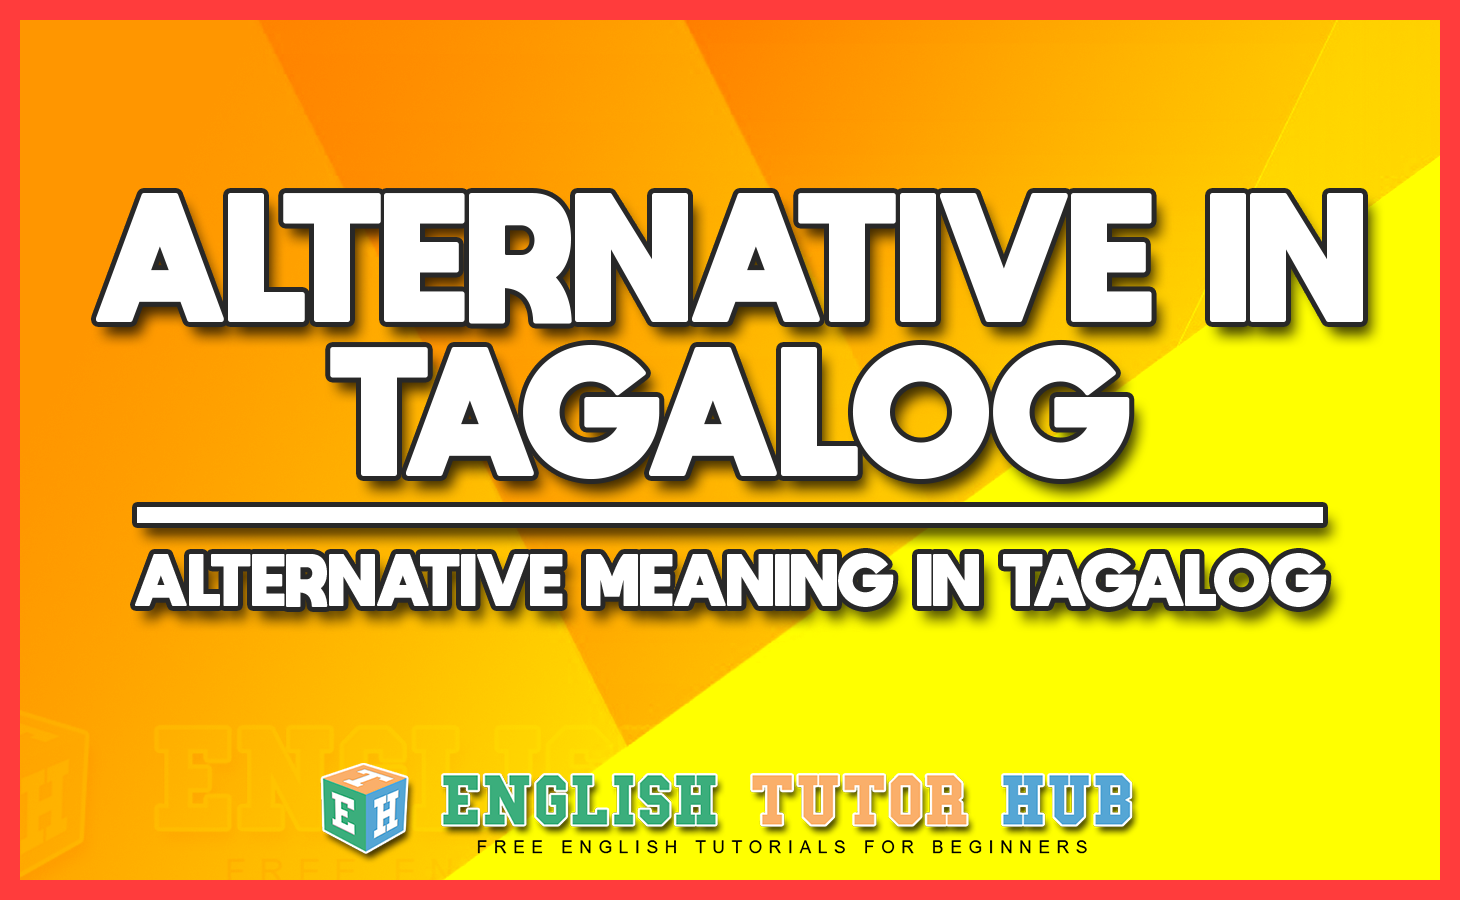 ALTERNATIVE IN TAGALOG - ALTERNATIVE MEANING IN TAGALOG